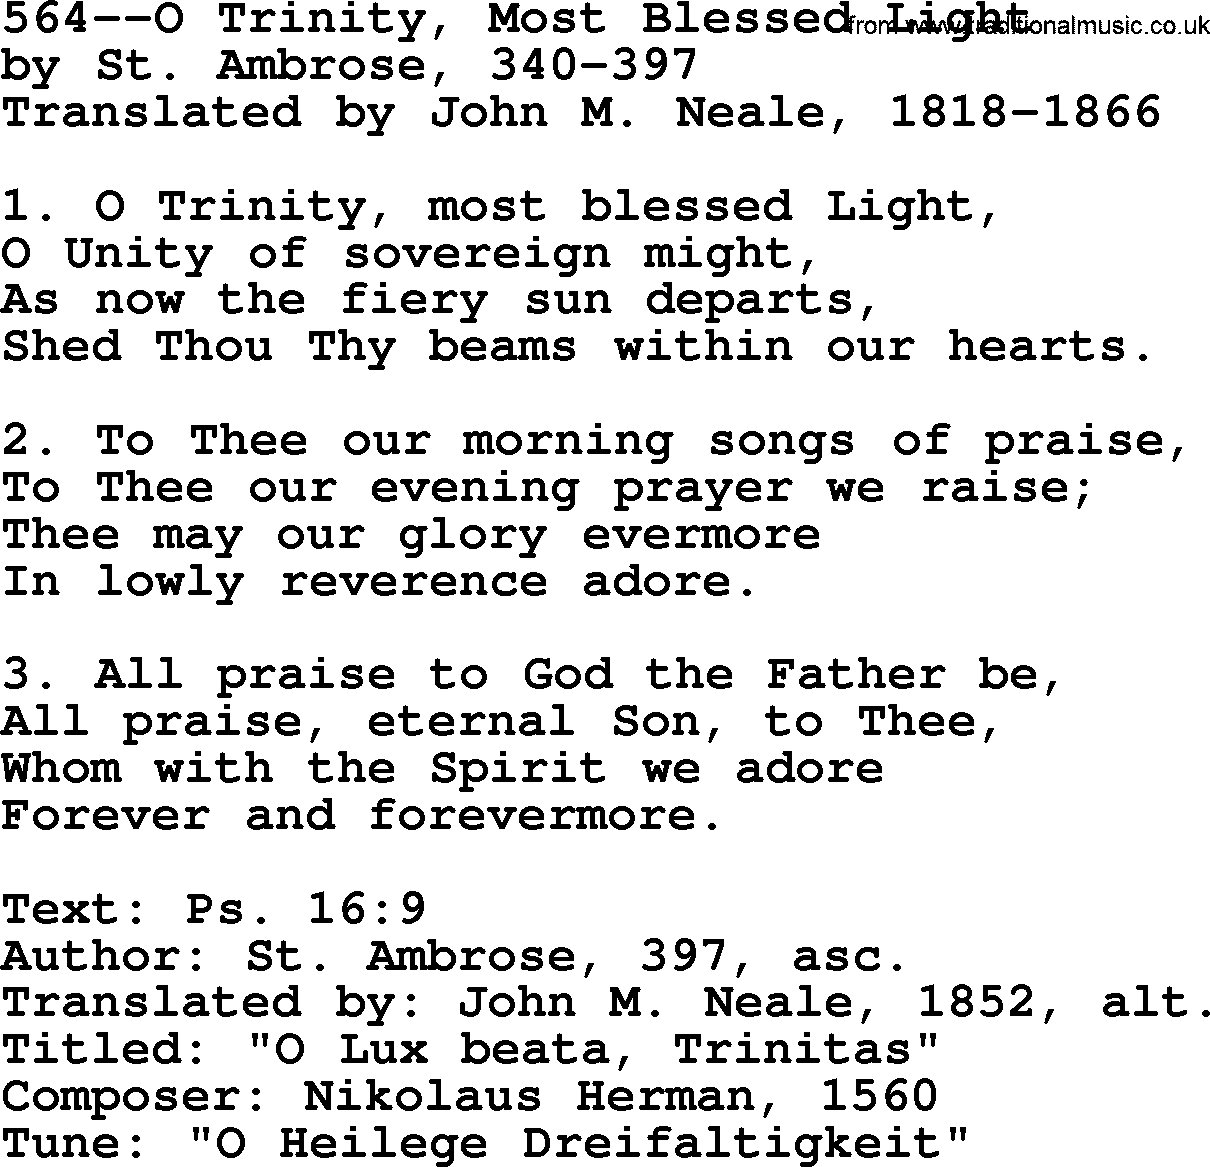 Lutheran Hymn: 564--O Trinity, Most Blessed Light.txt lyrics with PDF